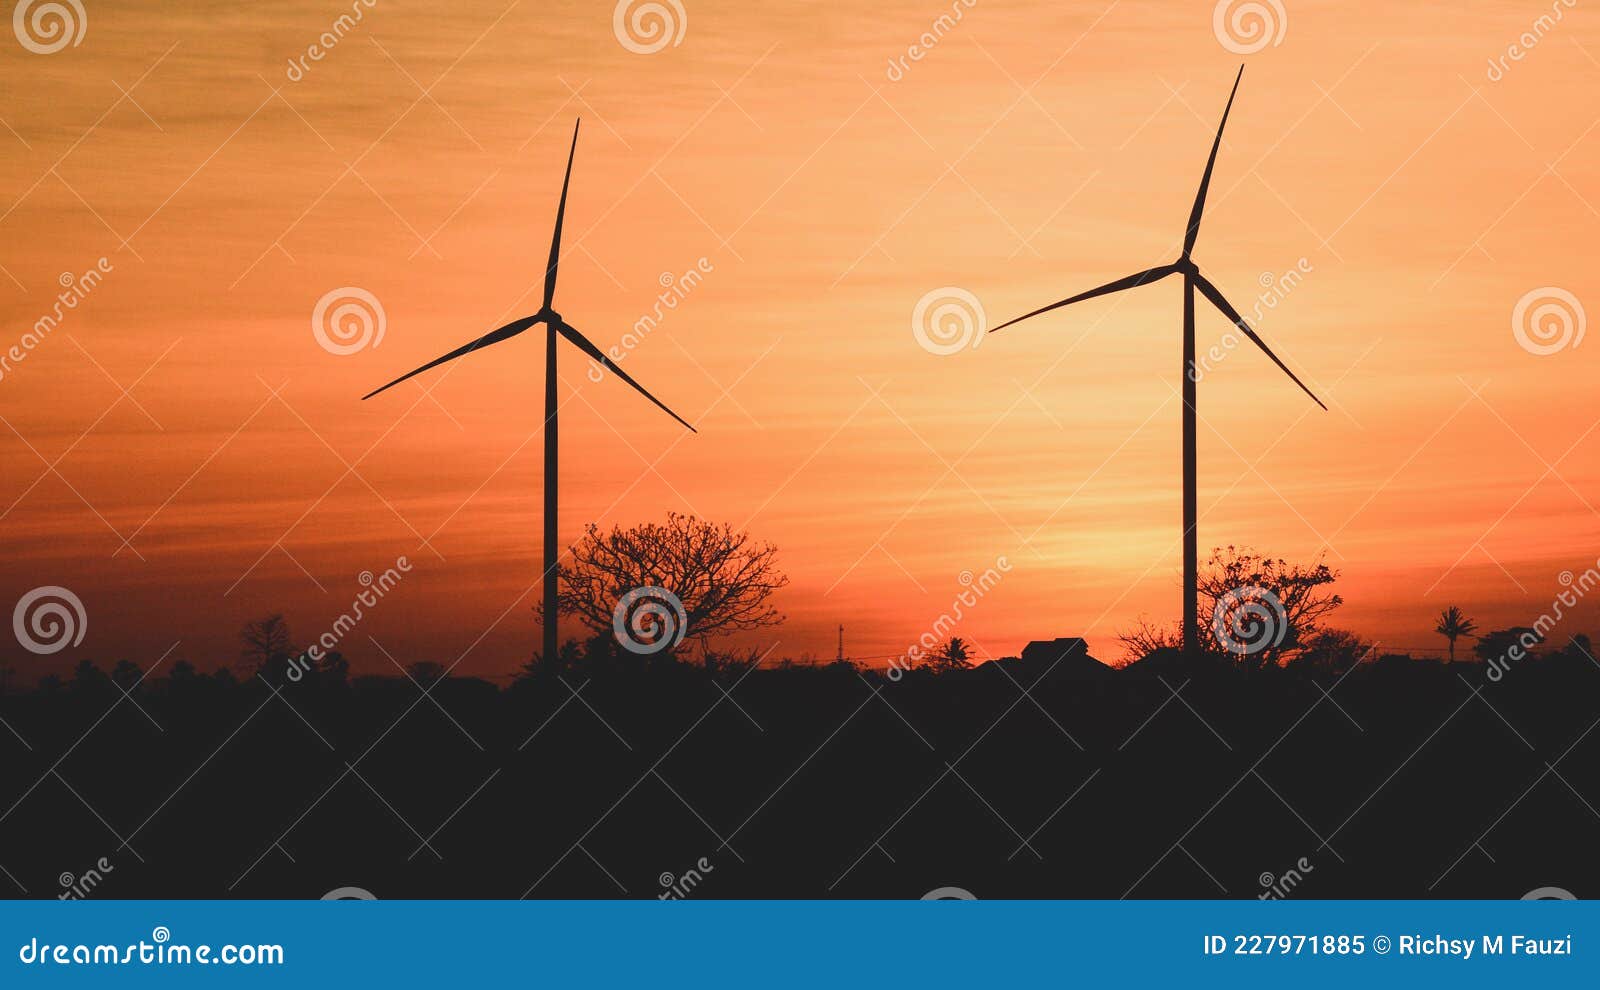 sunset view at wind turbin area, jeneponto, sulawesi, indonesia